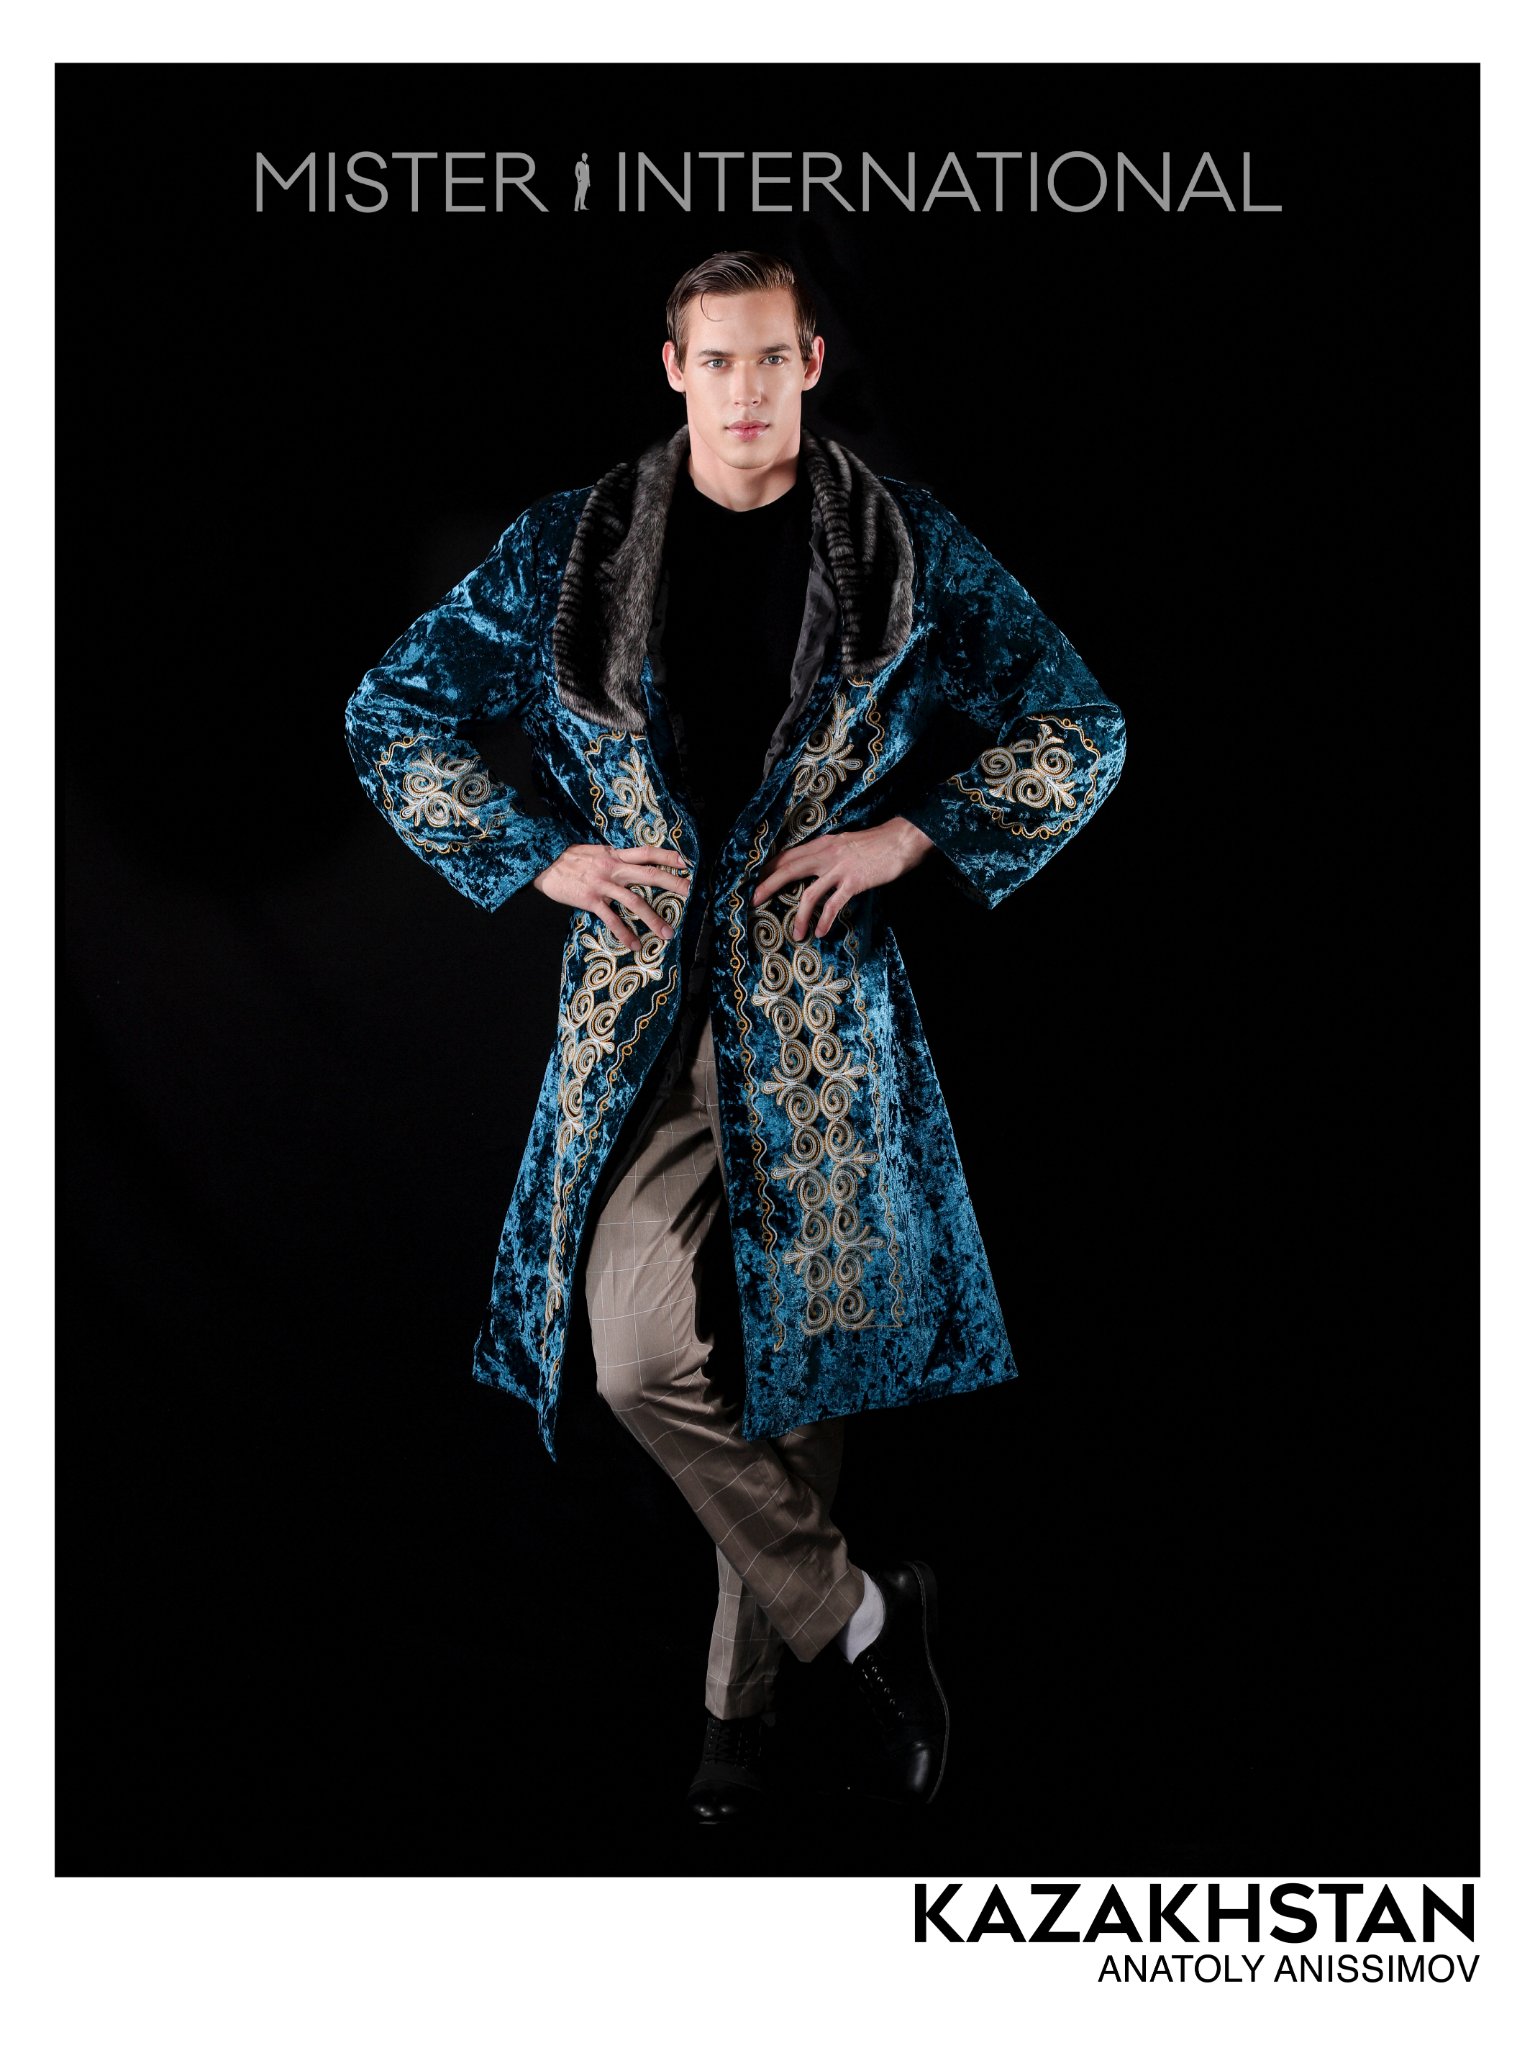 Mister International 2022 KAZAKHSTAN Anatoly Anissimov National Costume Shot by Raymond Saldana